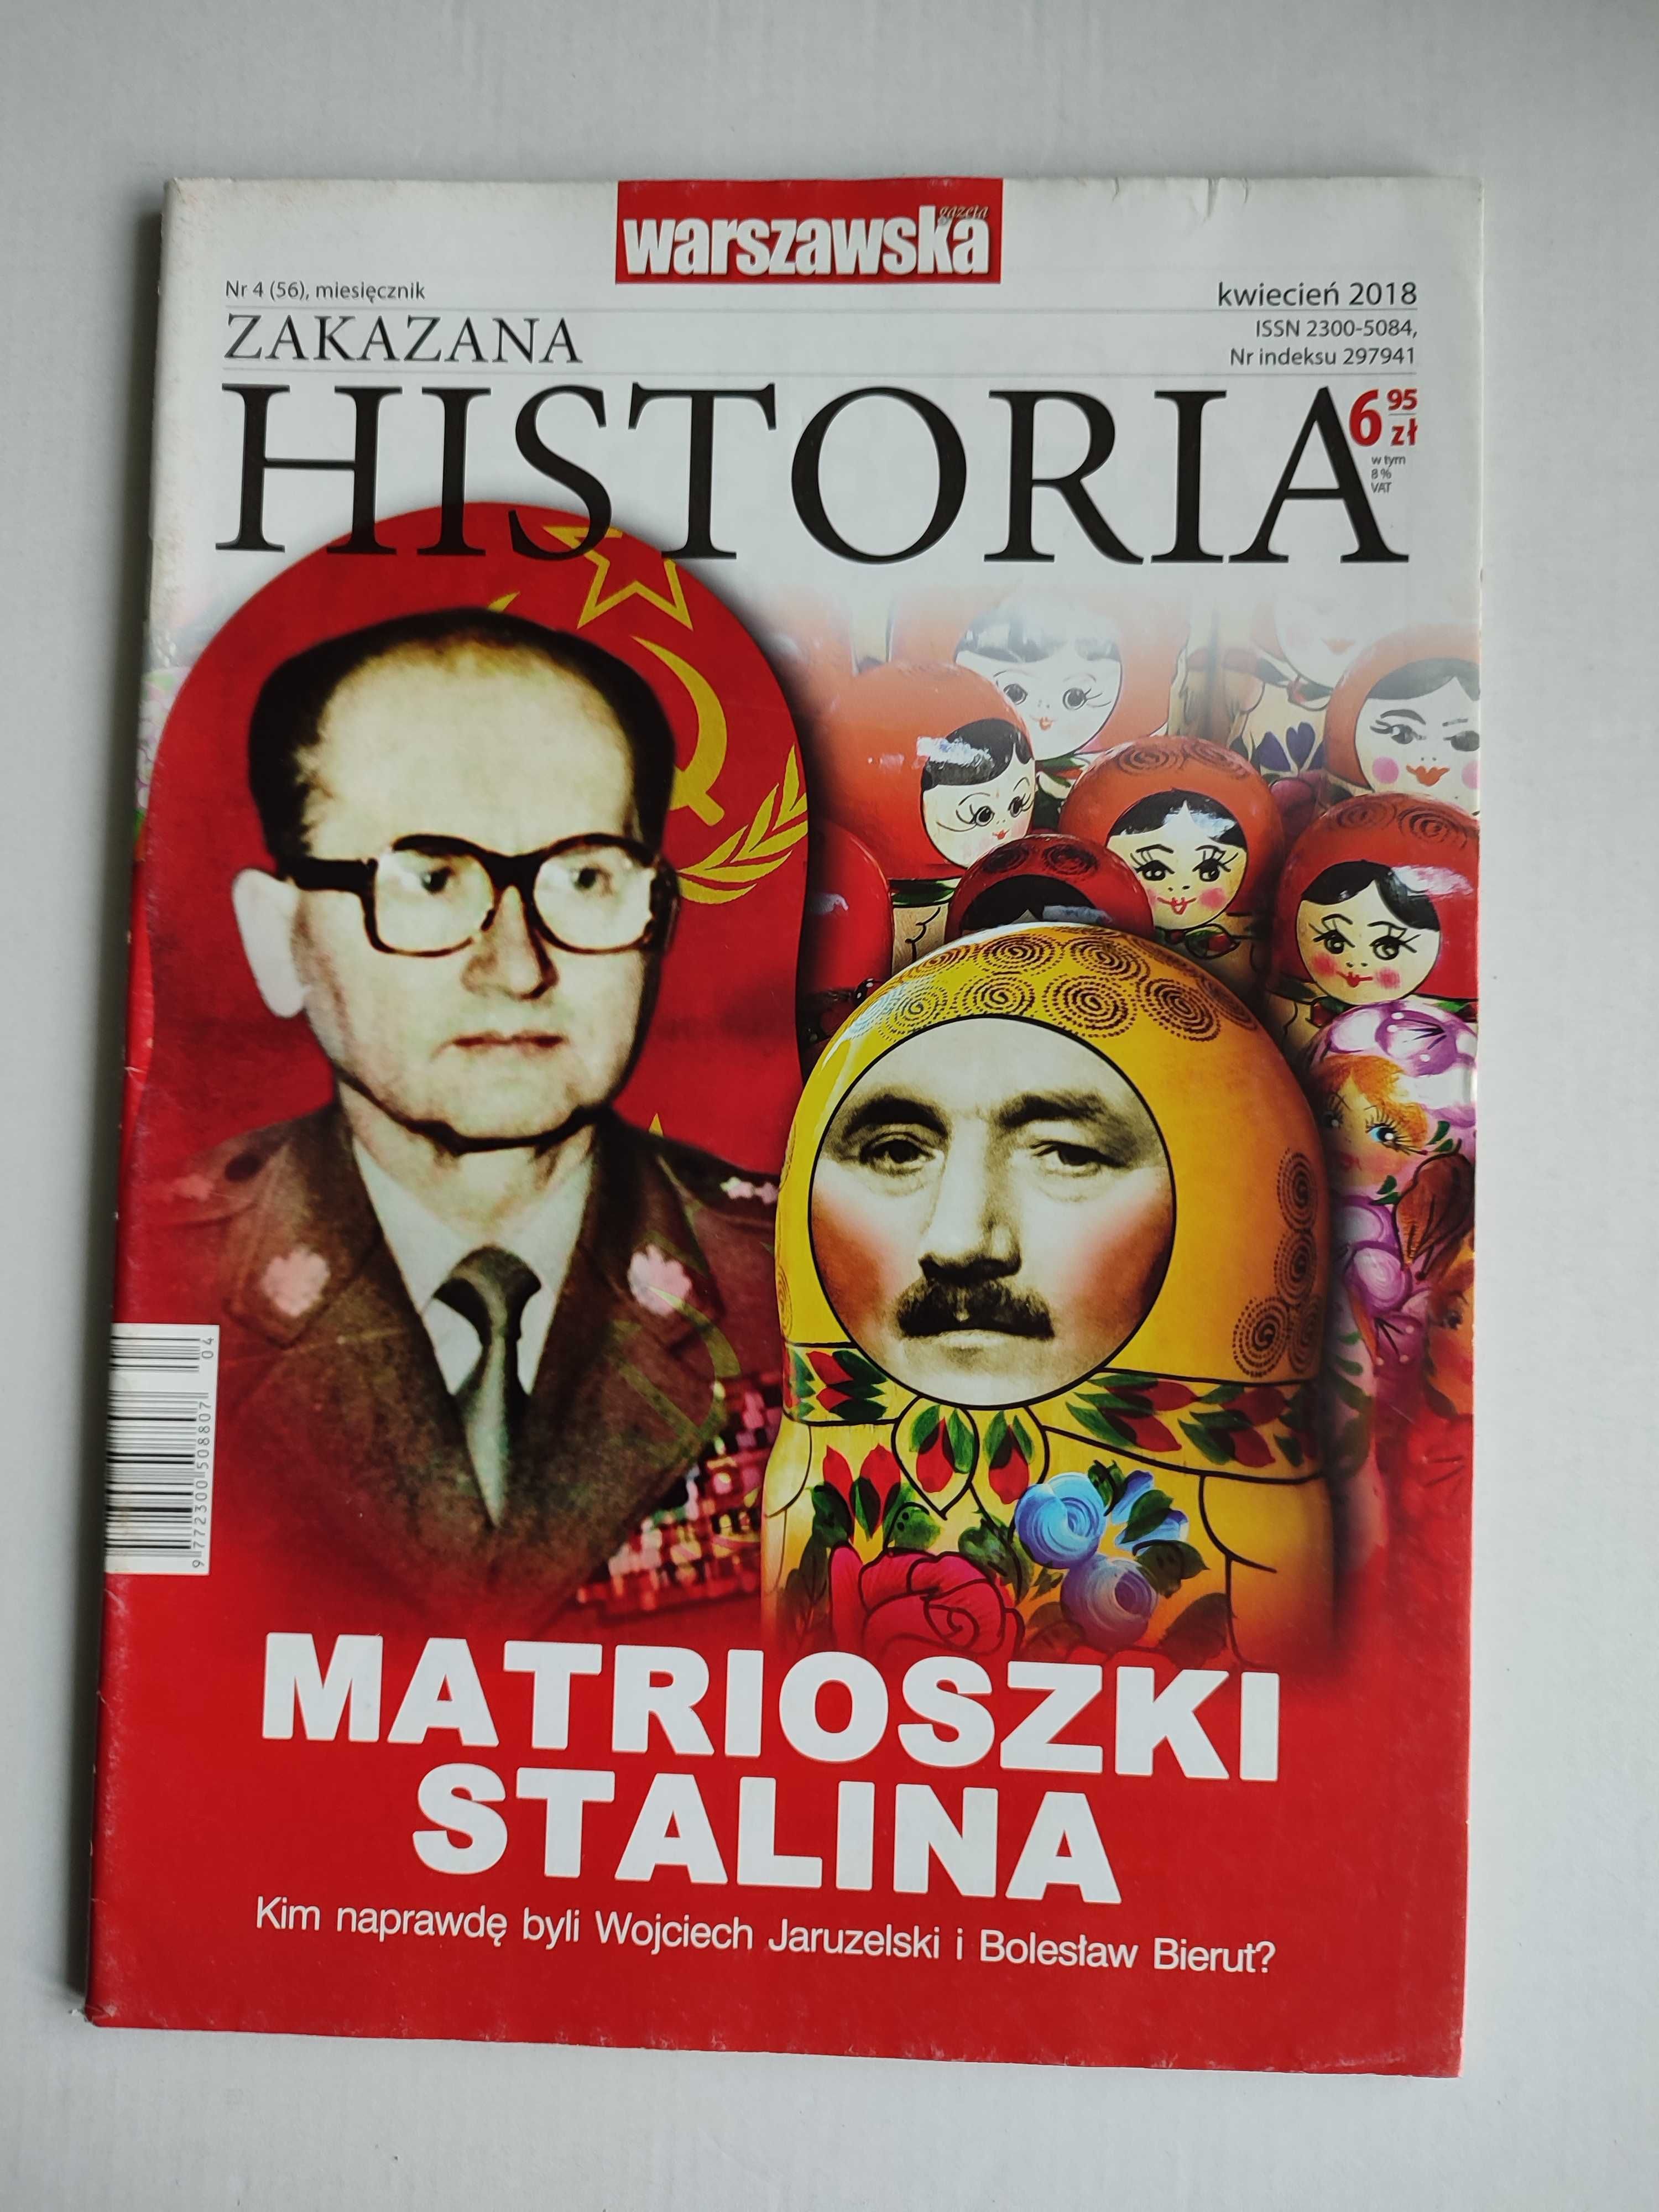 Czasopismo "Zakazana Historia" nr 4/2018